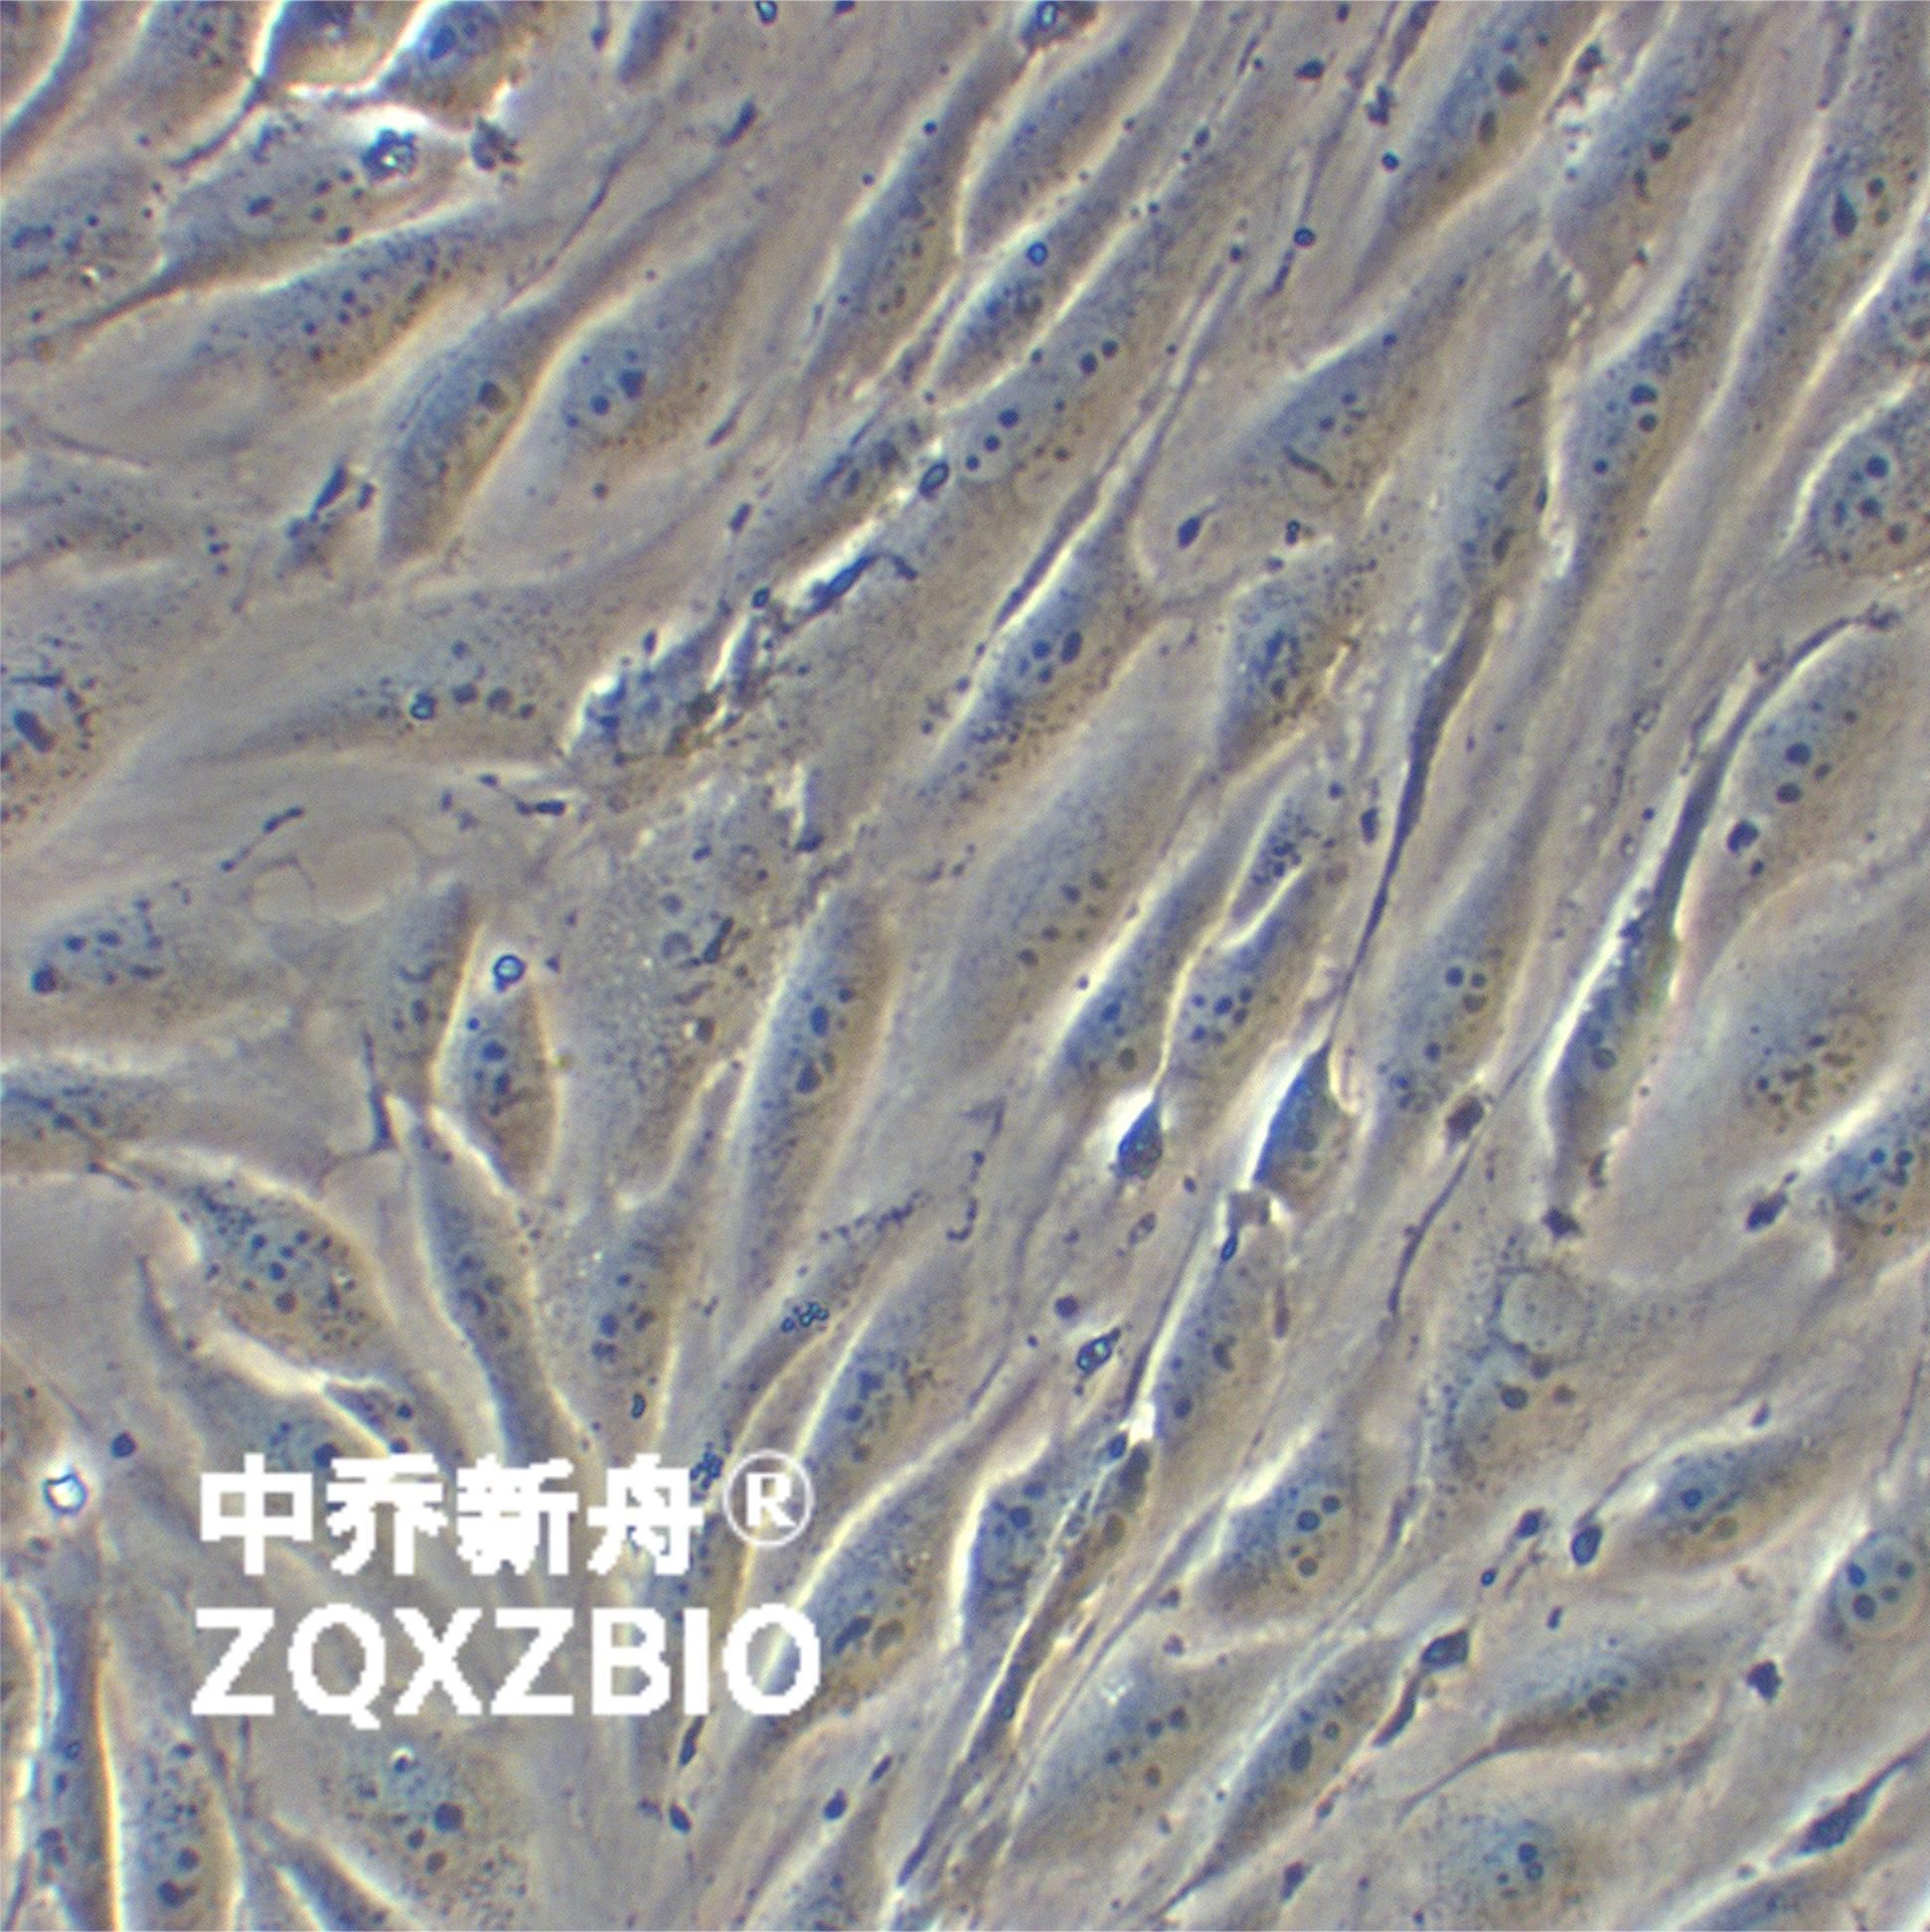 MS1小鼠胰岛内皮细胞